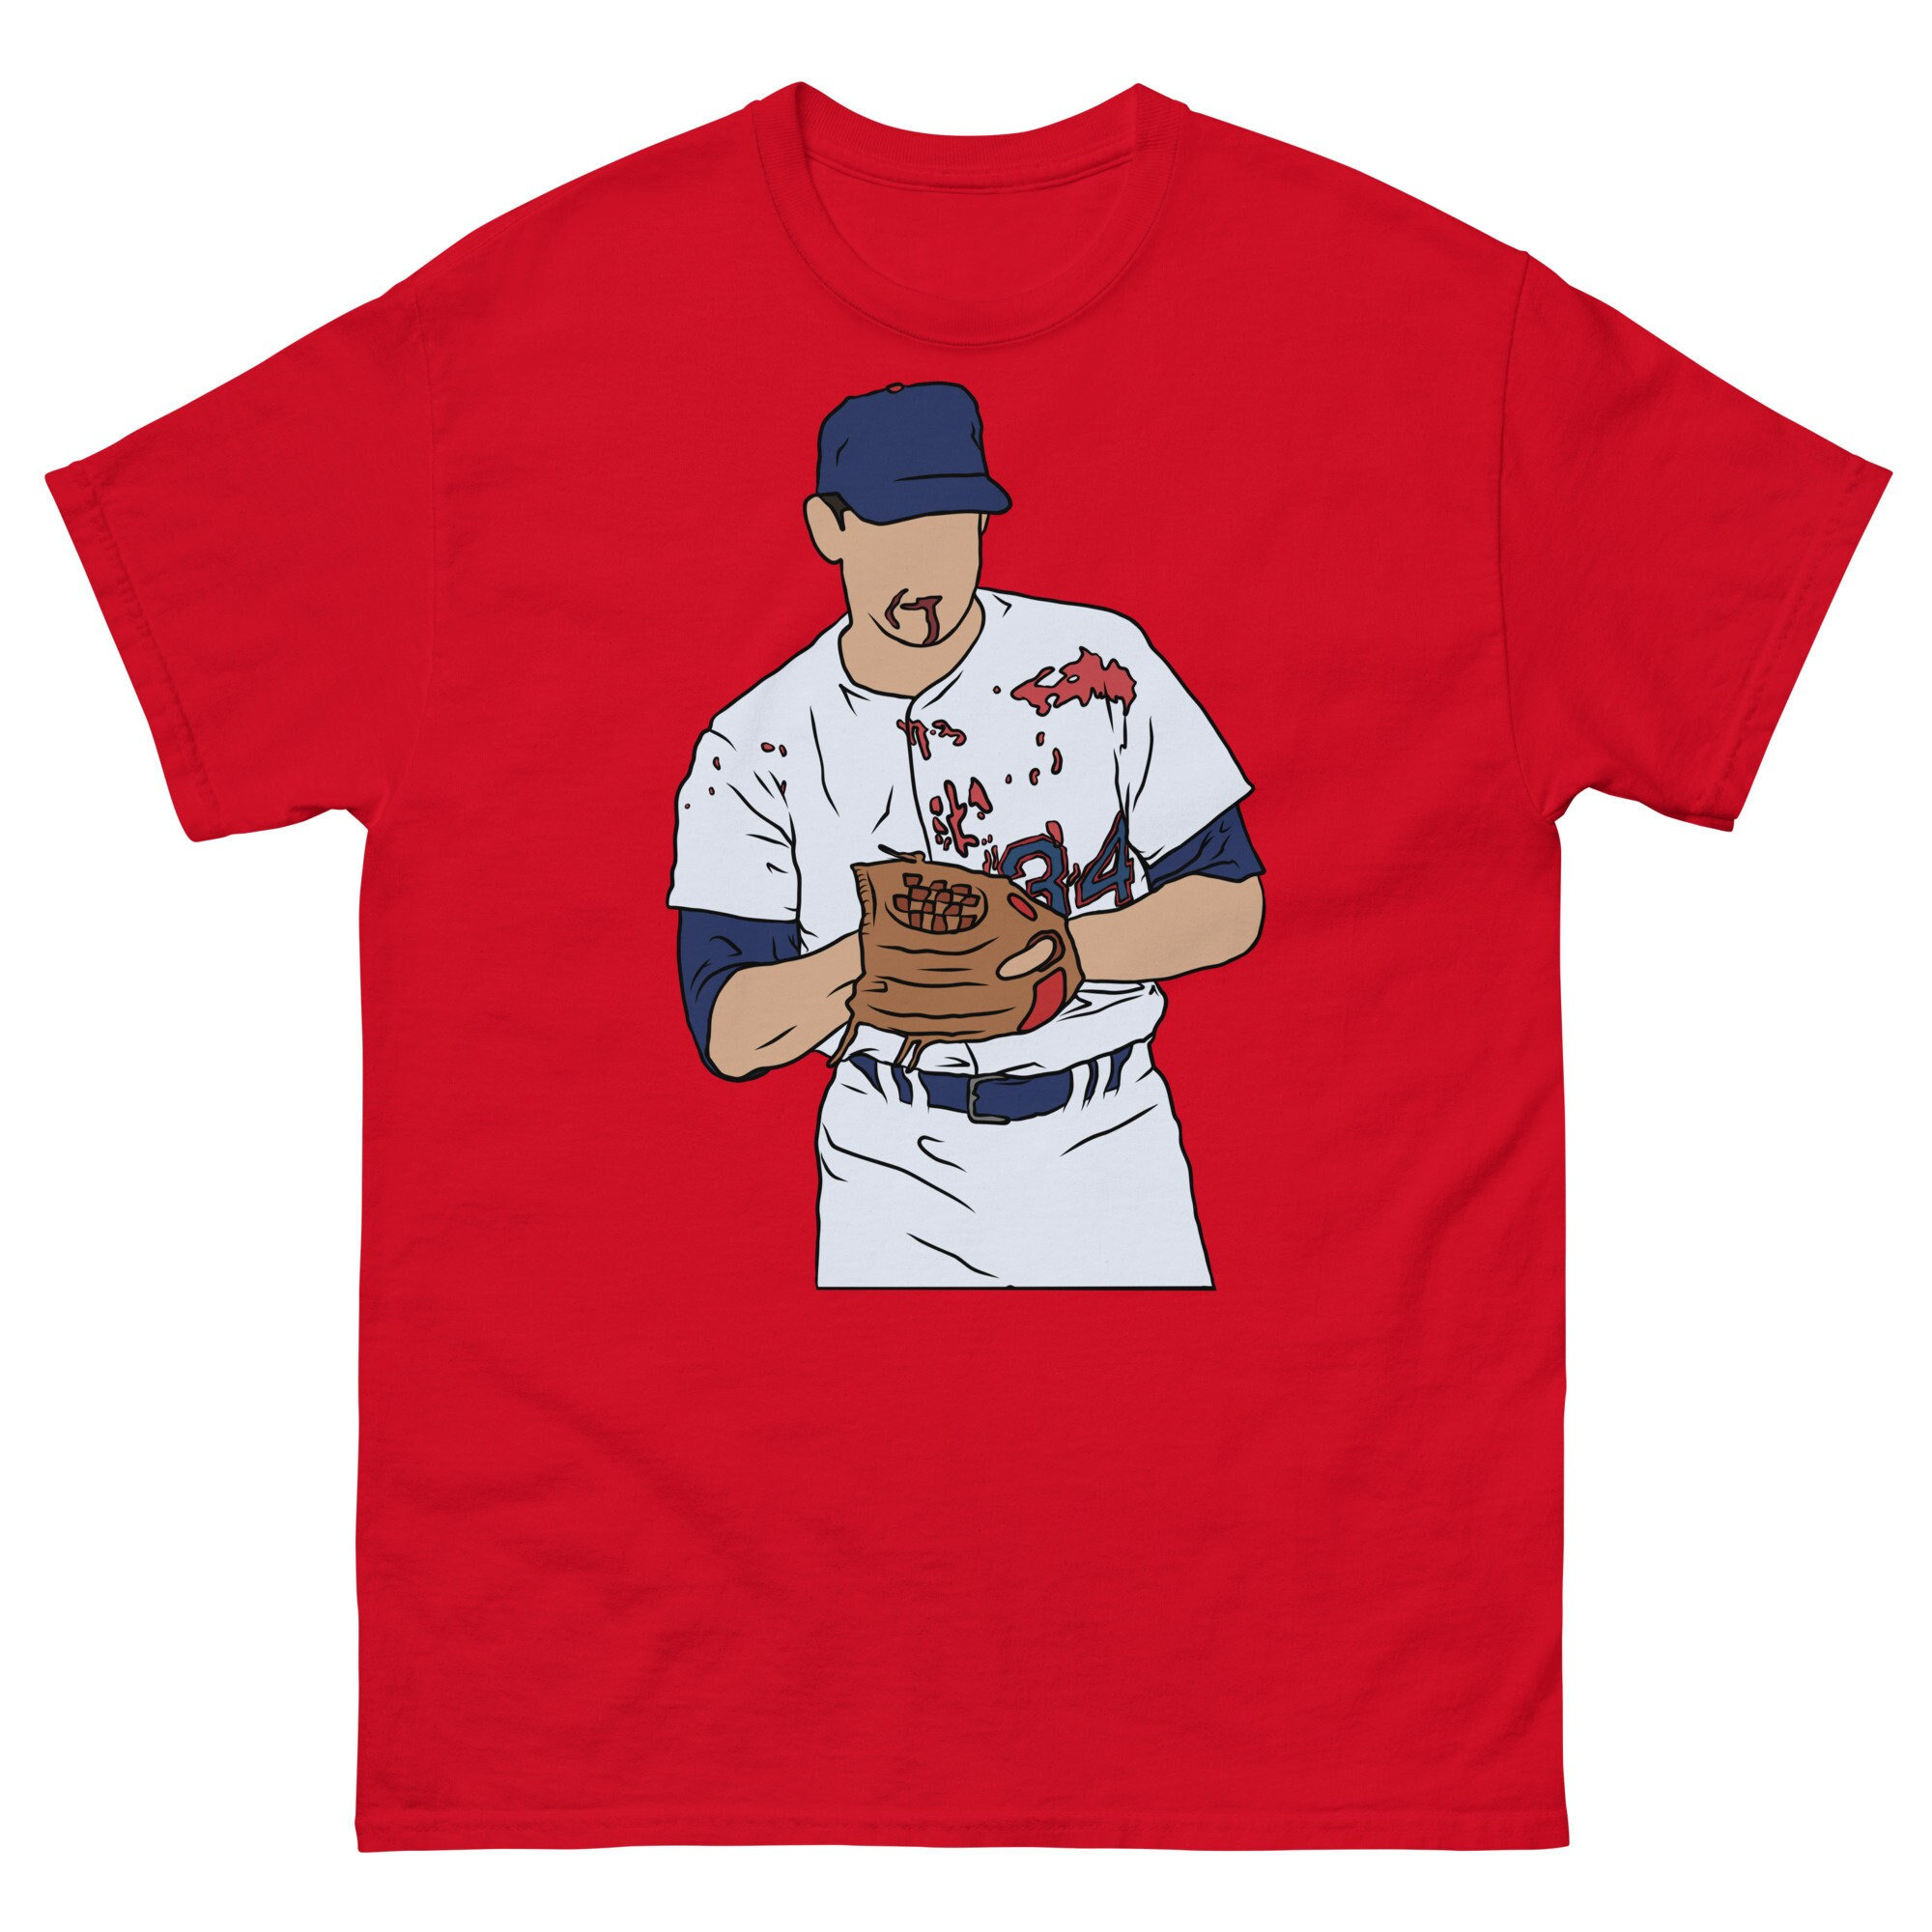 Nolan Ryan Texas Rangers Bloody Signatur T-Shirt - Guineashirt Premium ™ LLC